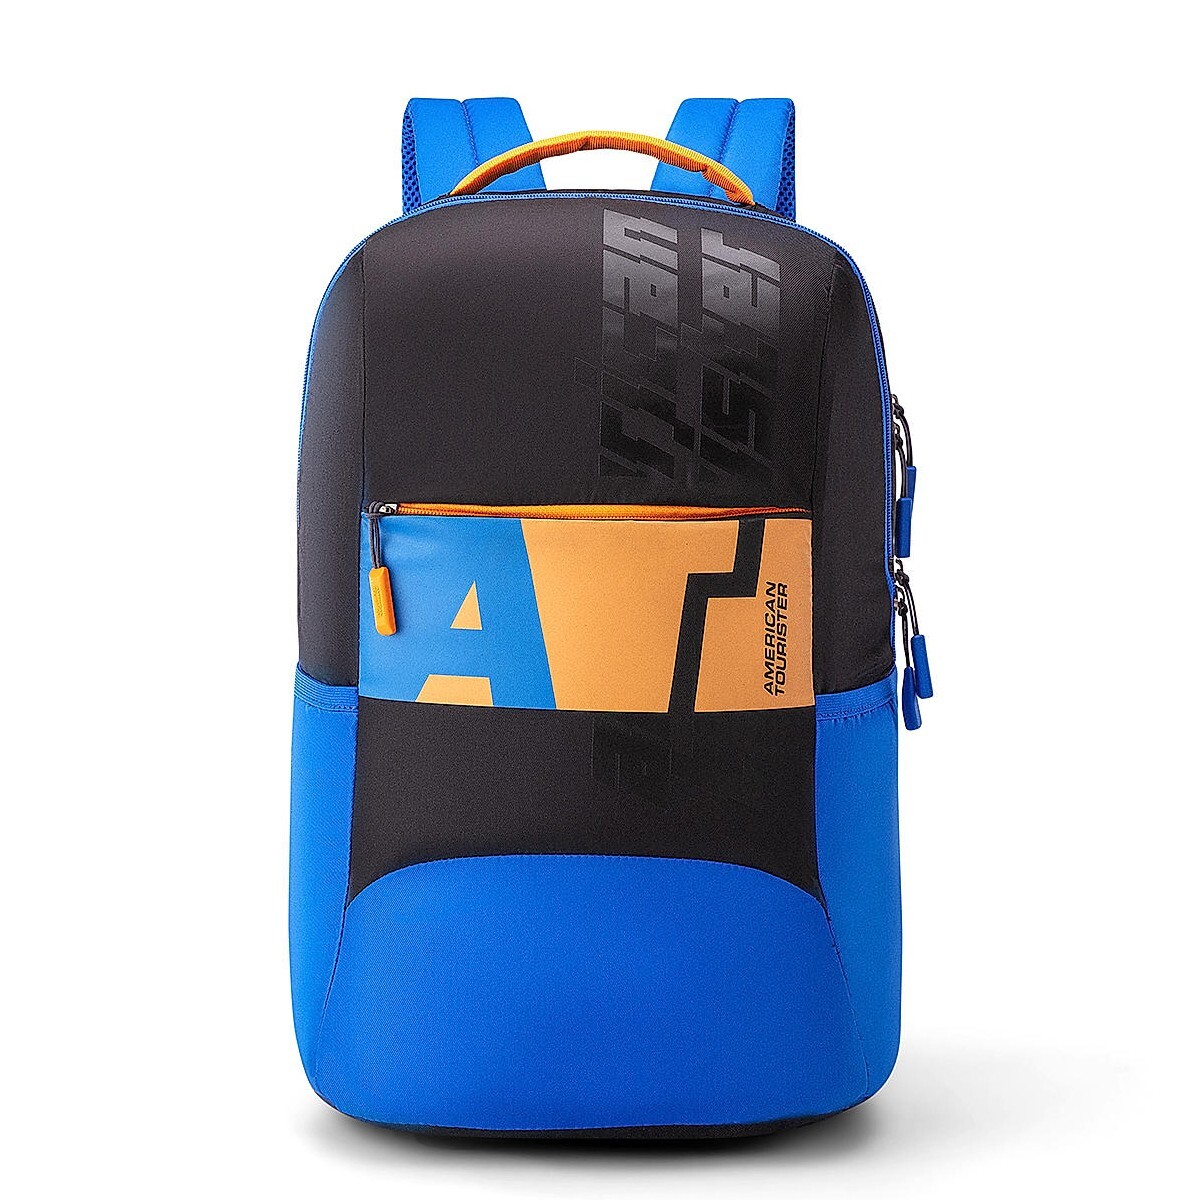 American Tourister Backpack Aleo 02 Black/Blue